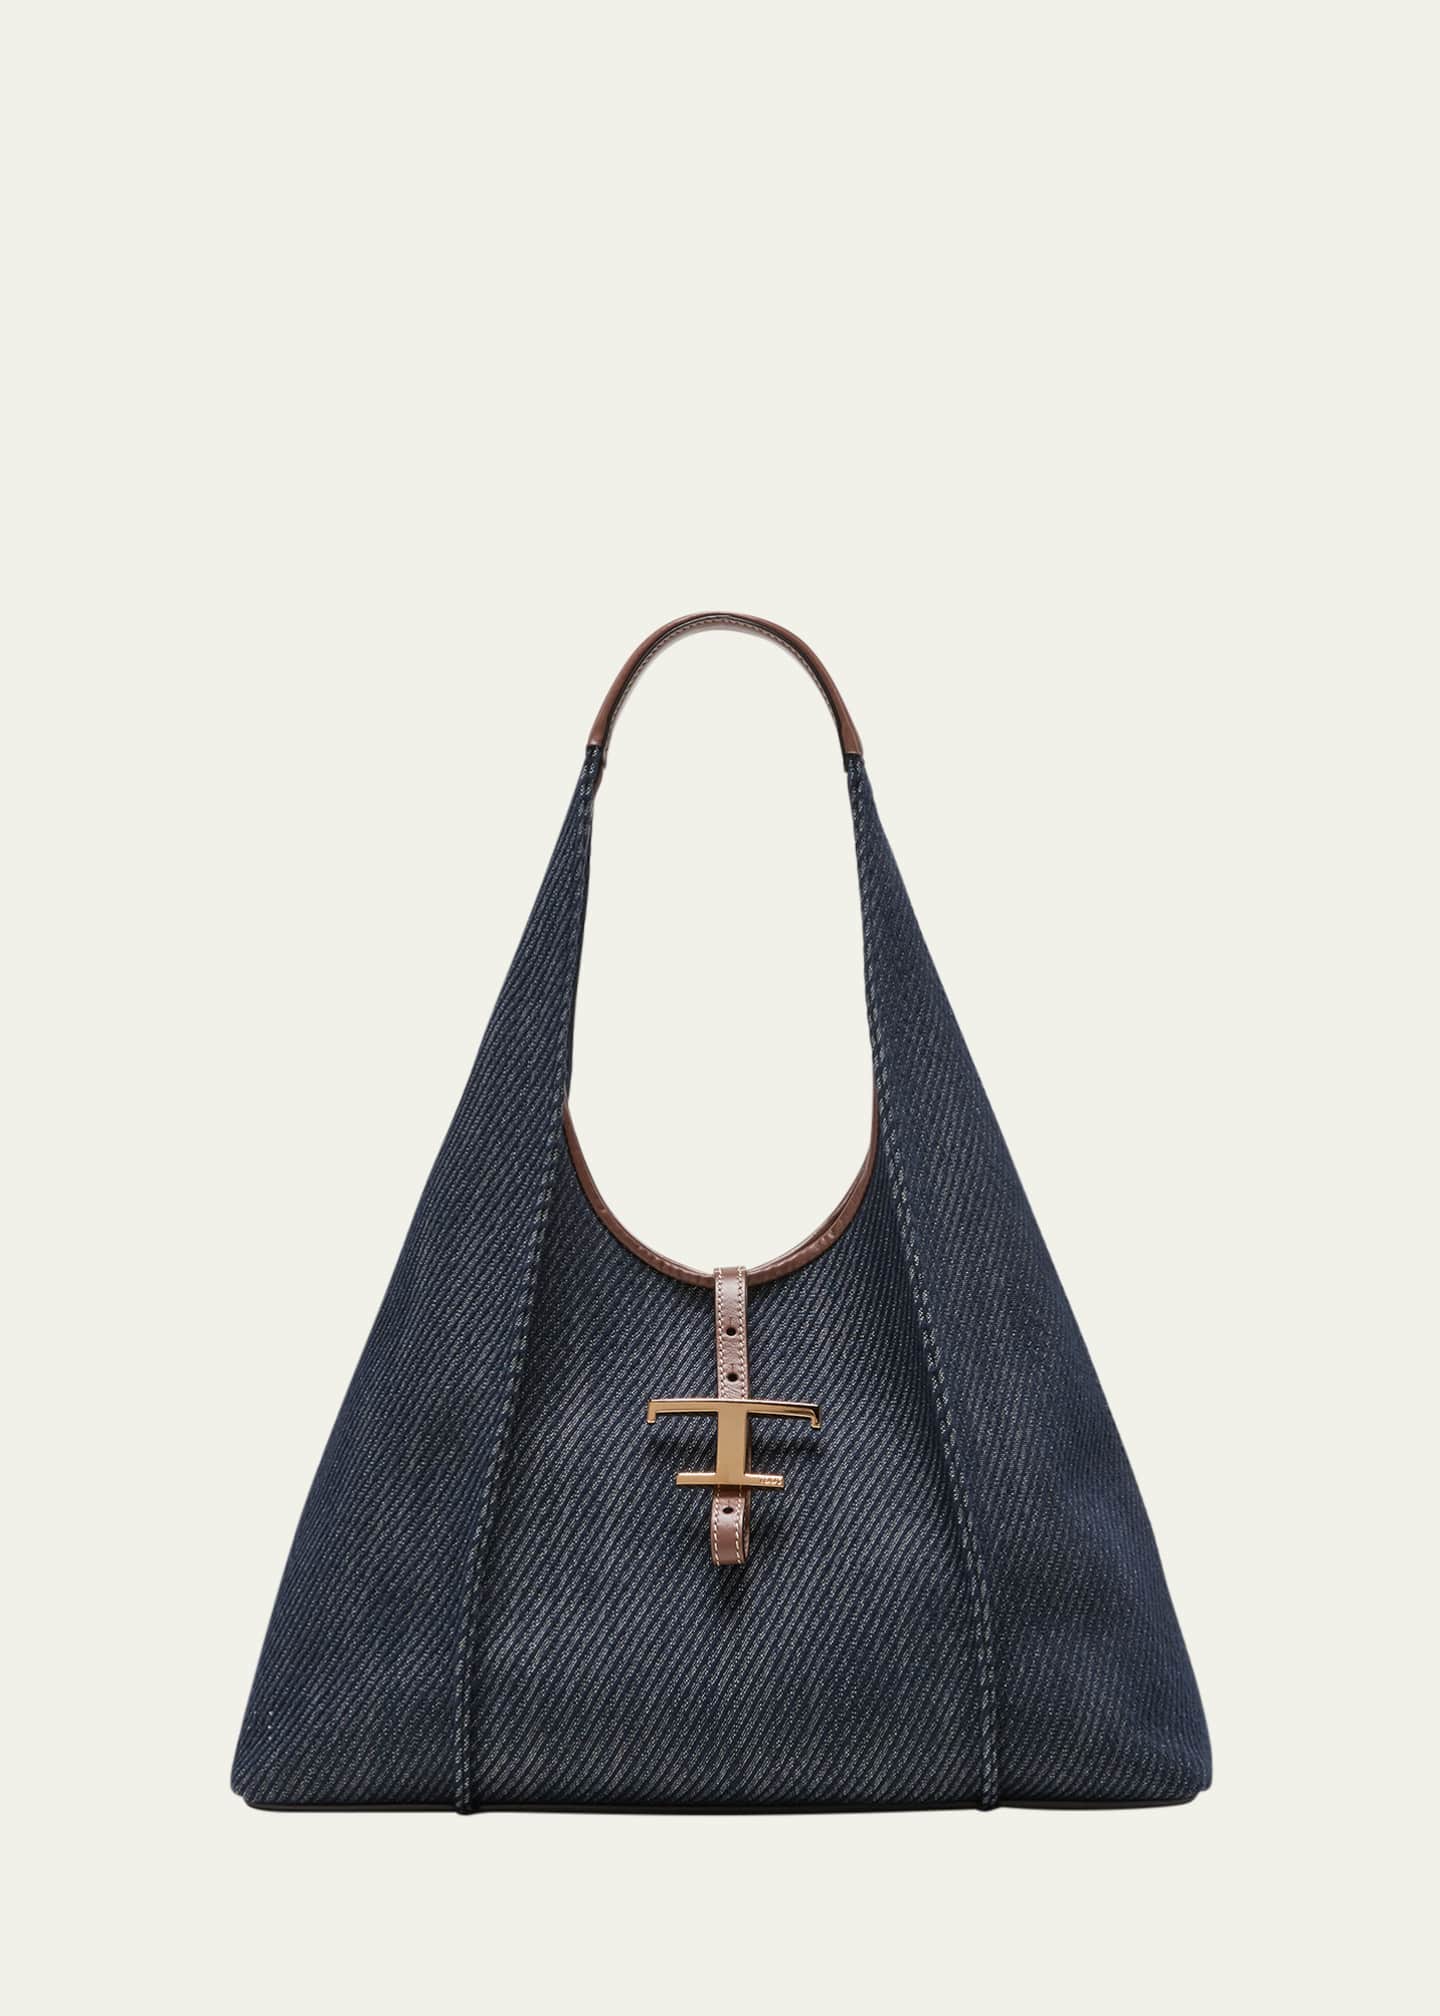 Designers Create Exclusive Bags for New Bergdorf Goodman Main